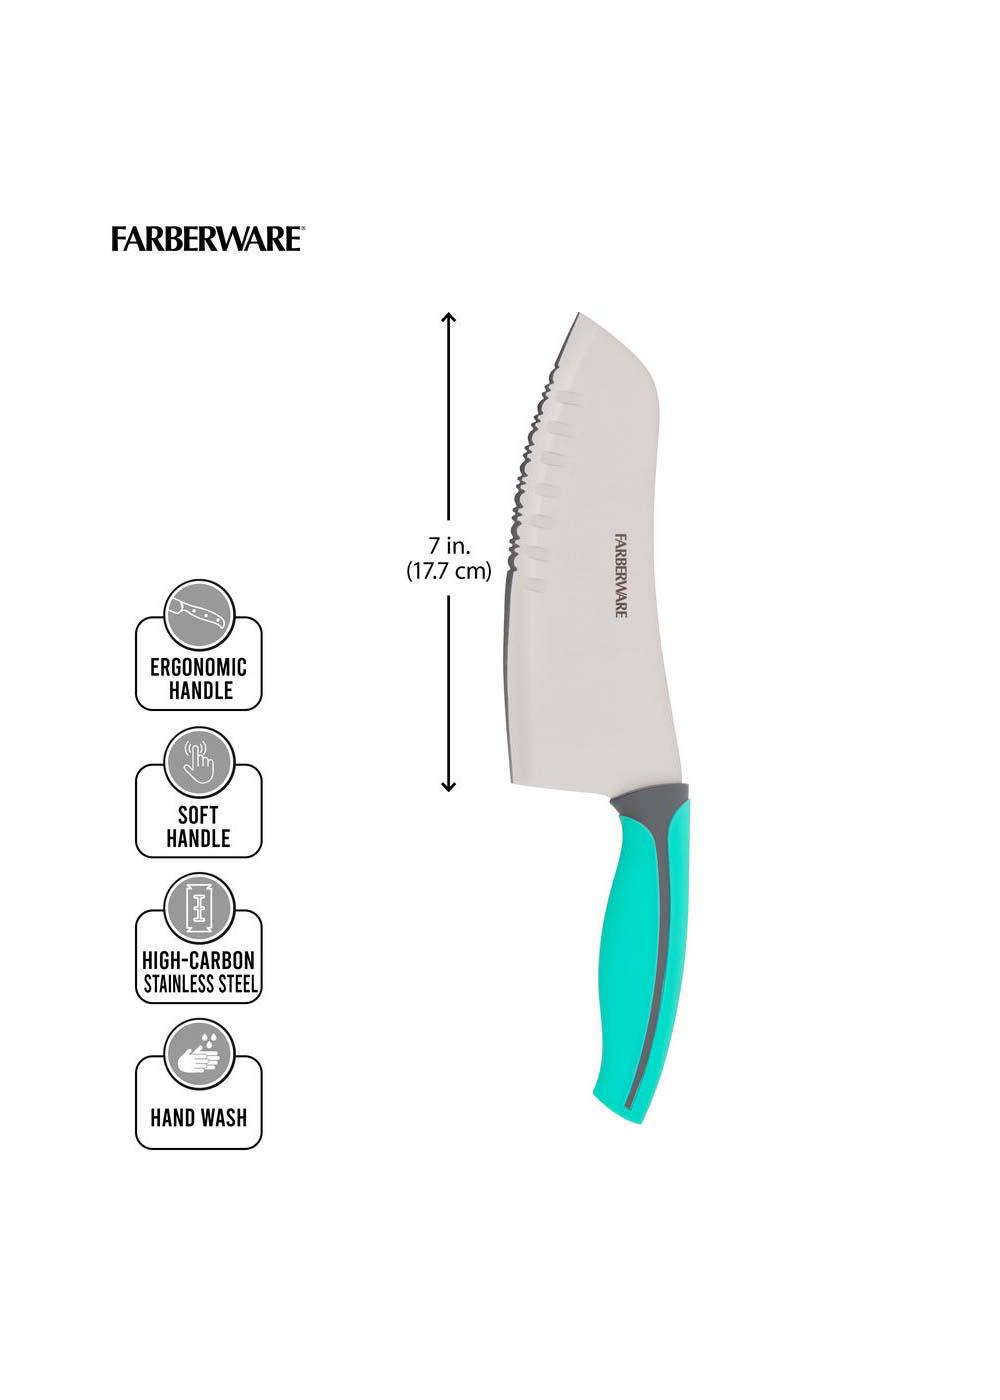  Farberware Ceramic Chef Knife with Custom-Fit Blade